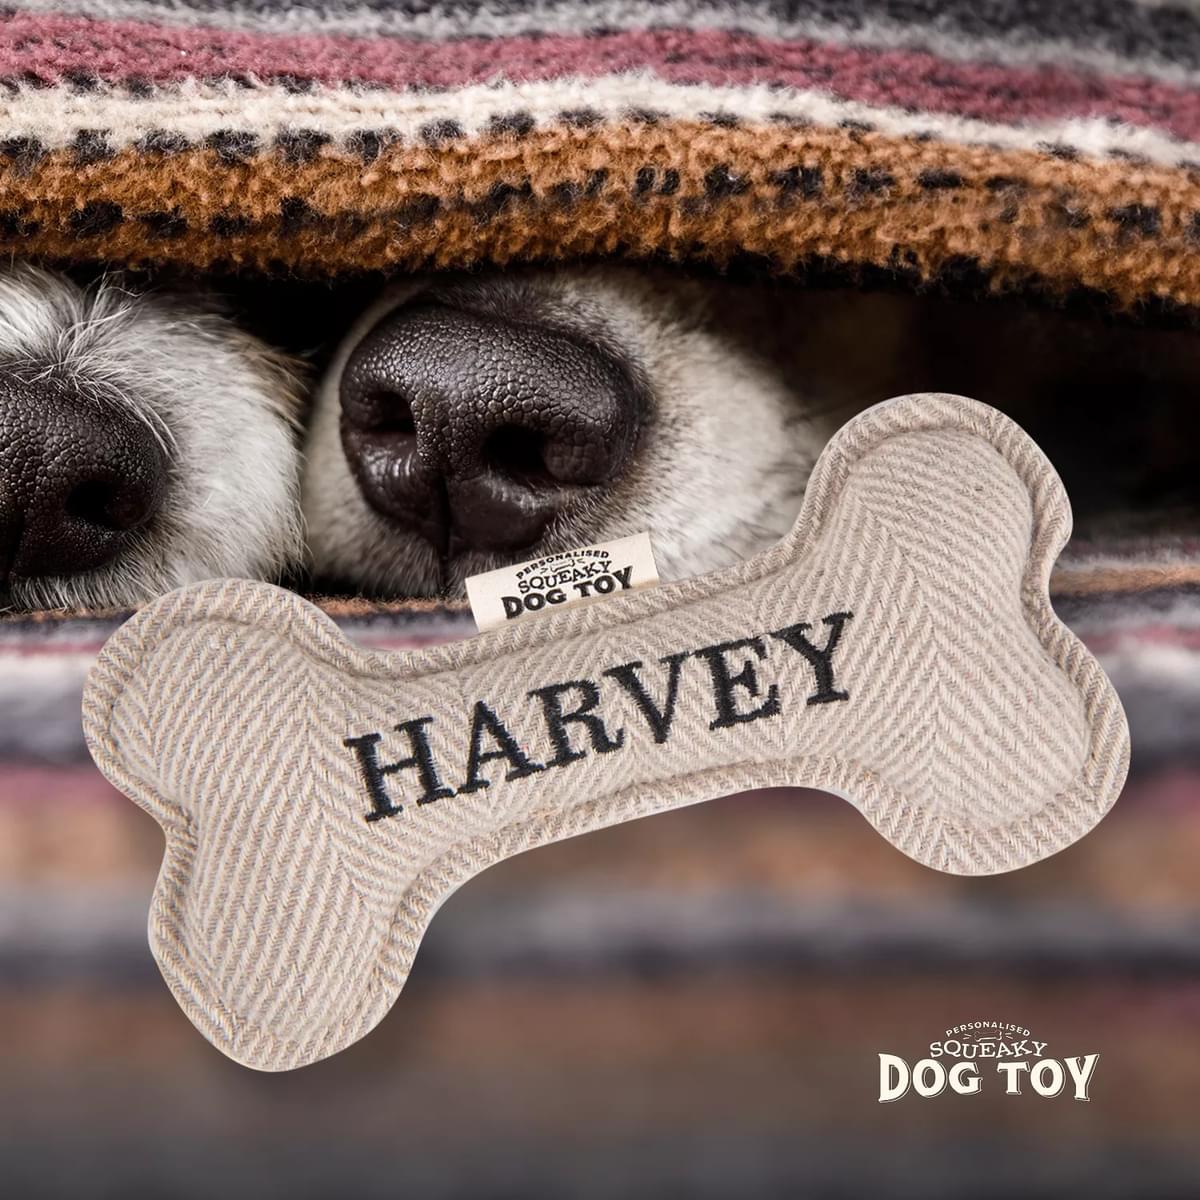 Named Squeaky Dog Toy- Harvey. Bone shaped herringbone tweed pattern dog toy. 